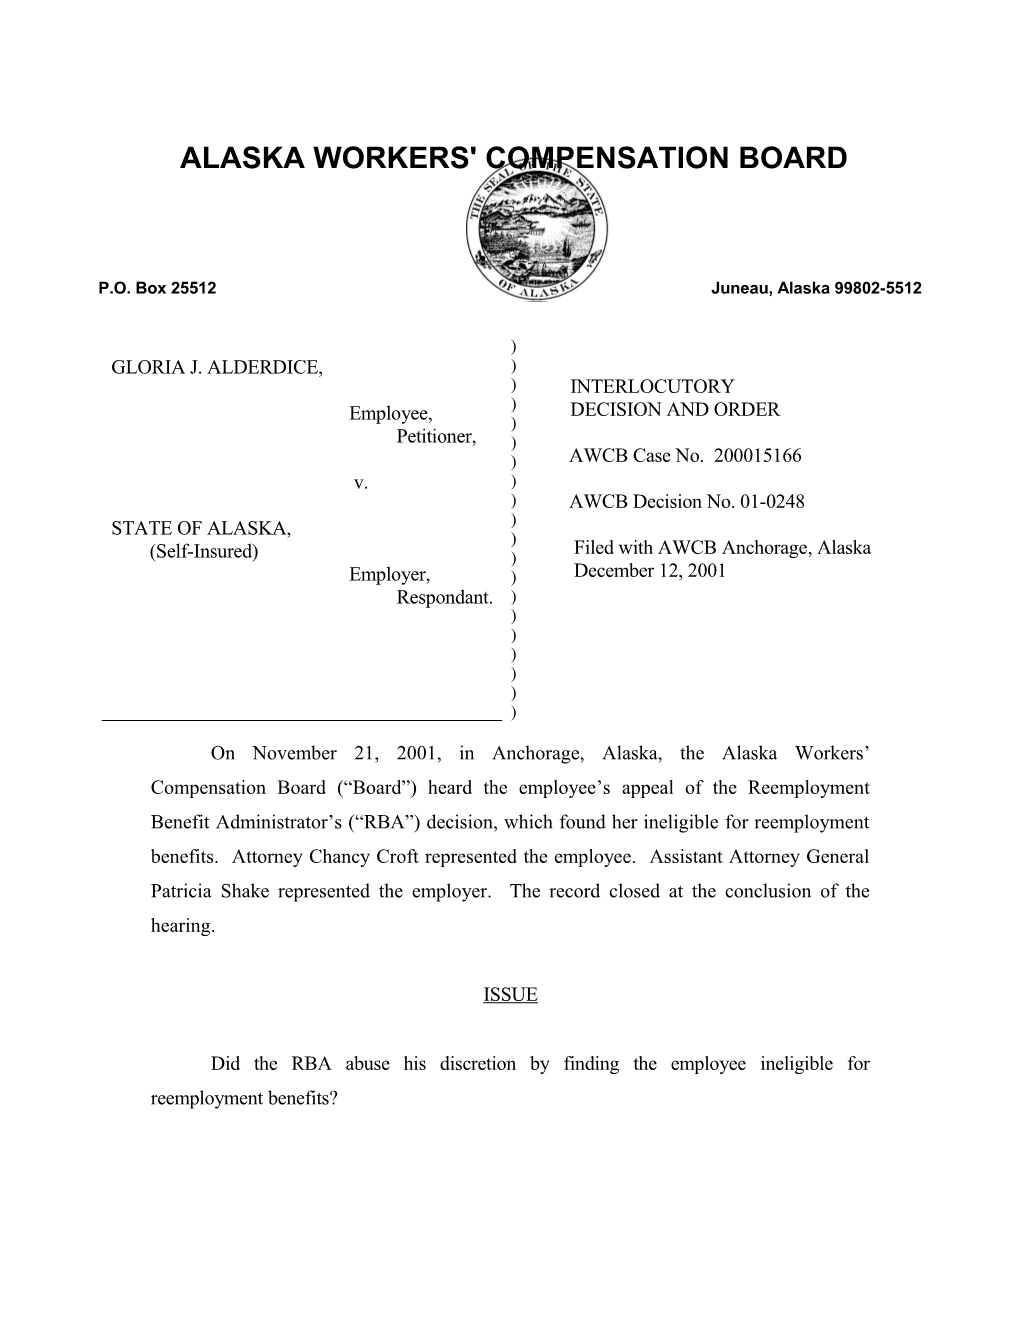 Alaska Workers' Compensation Board s4